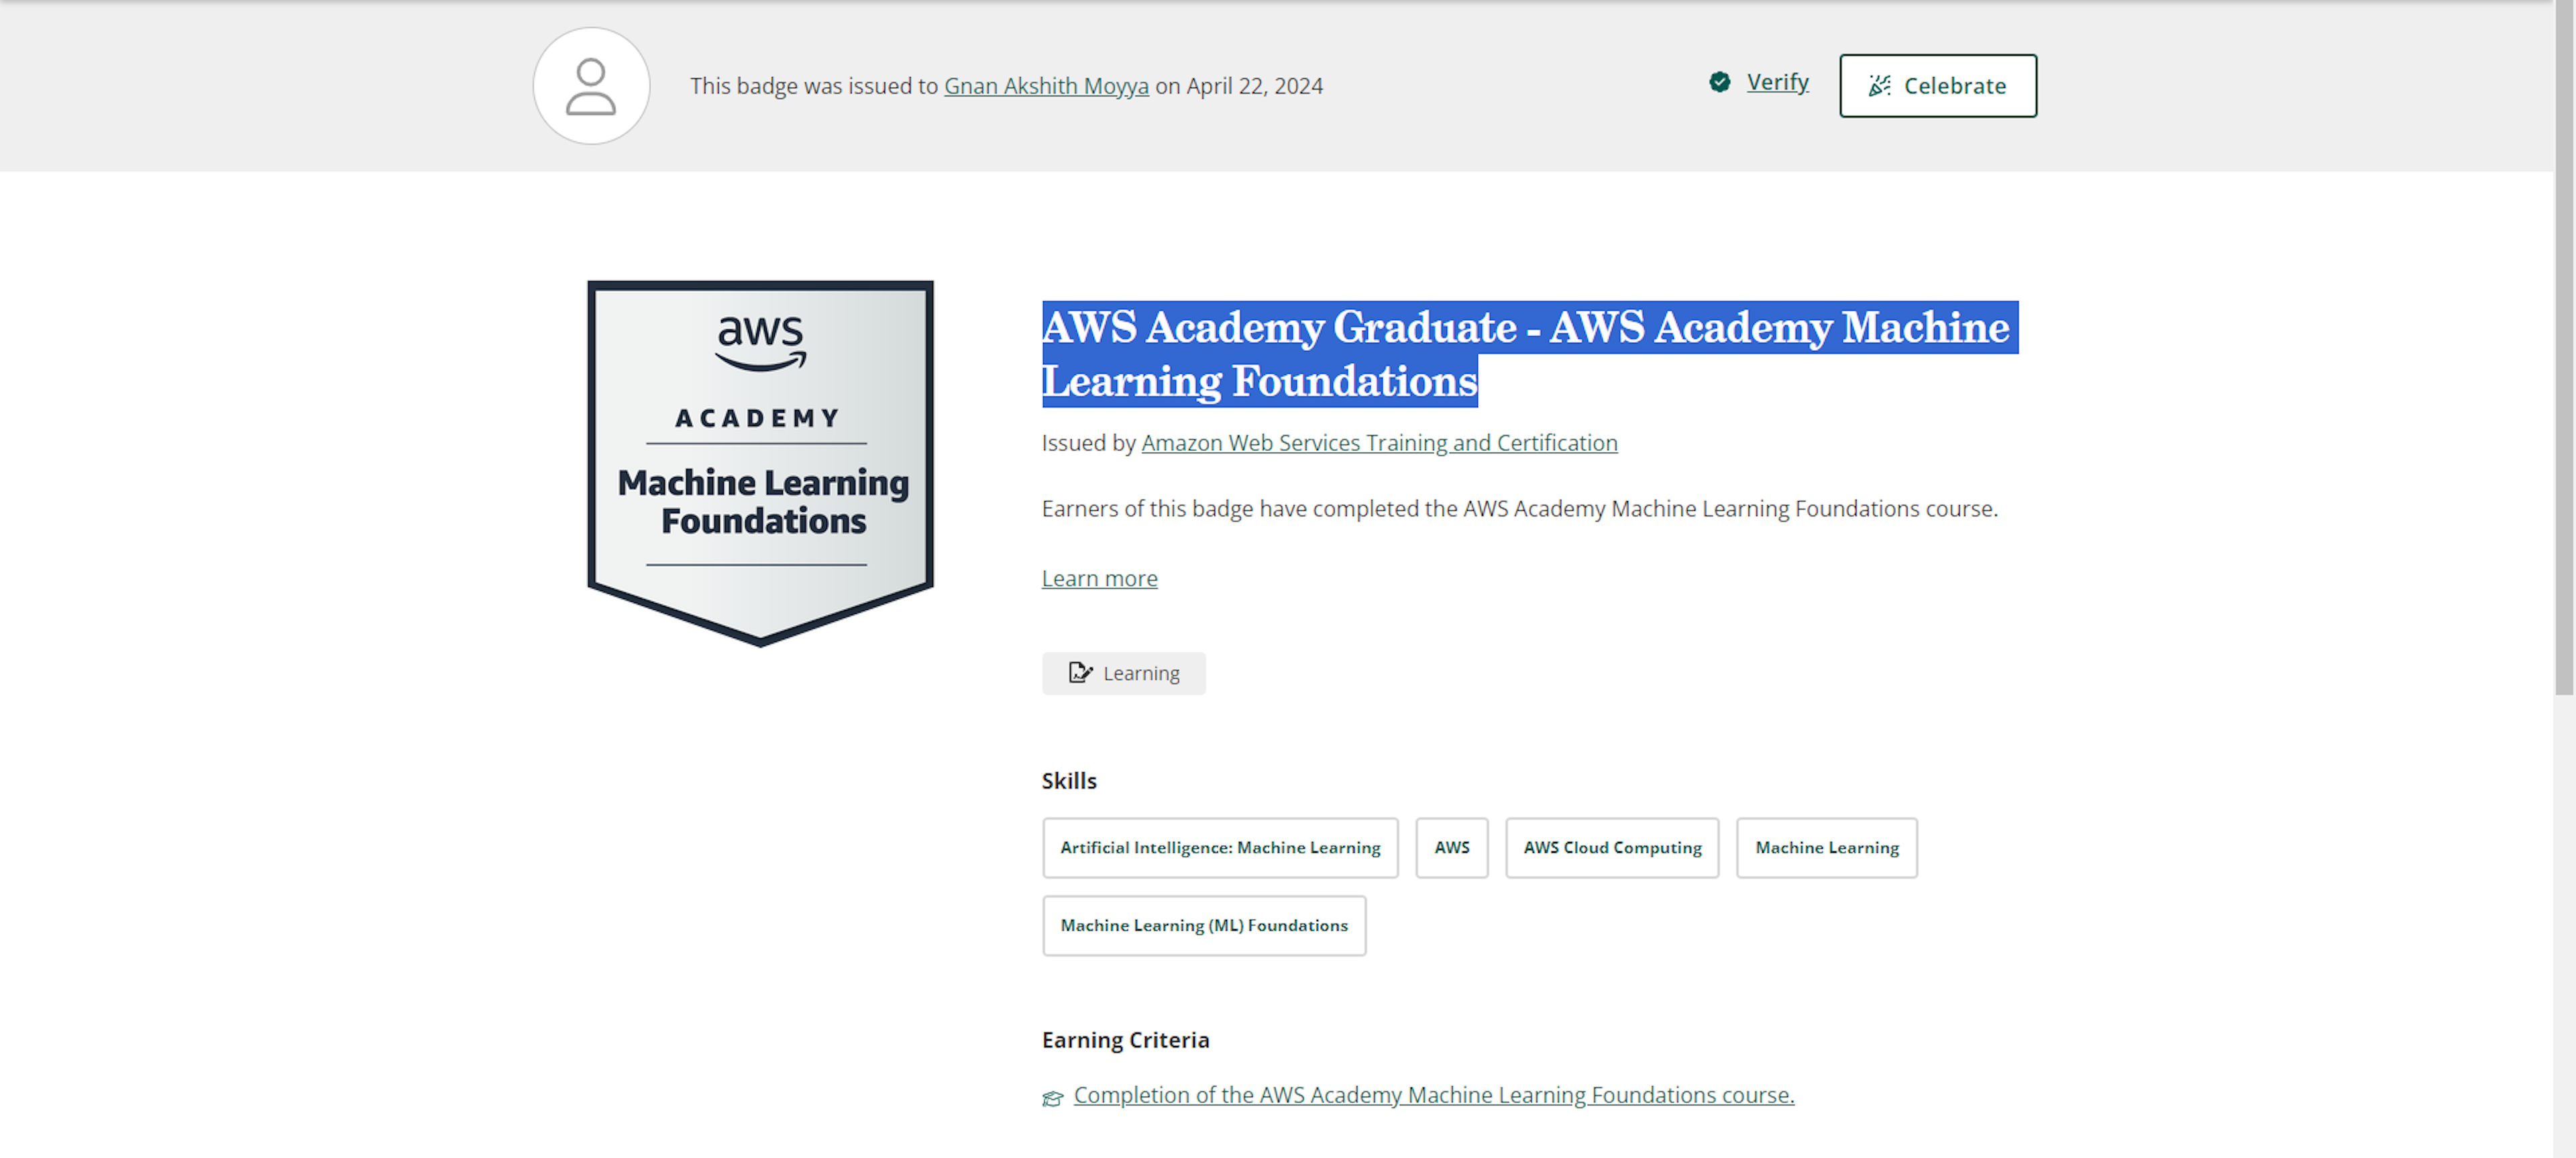 AWS Academy Graduate - AWS Academy Machine Learning Foundations